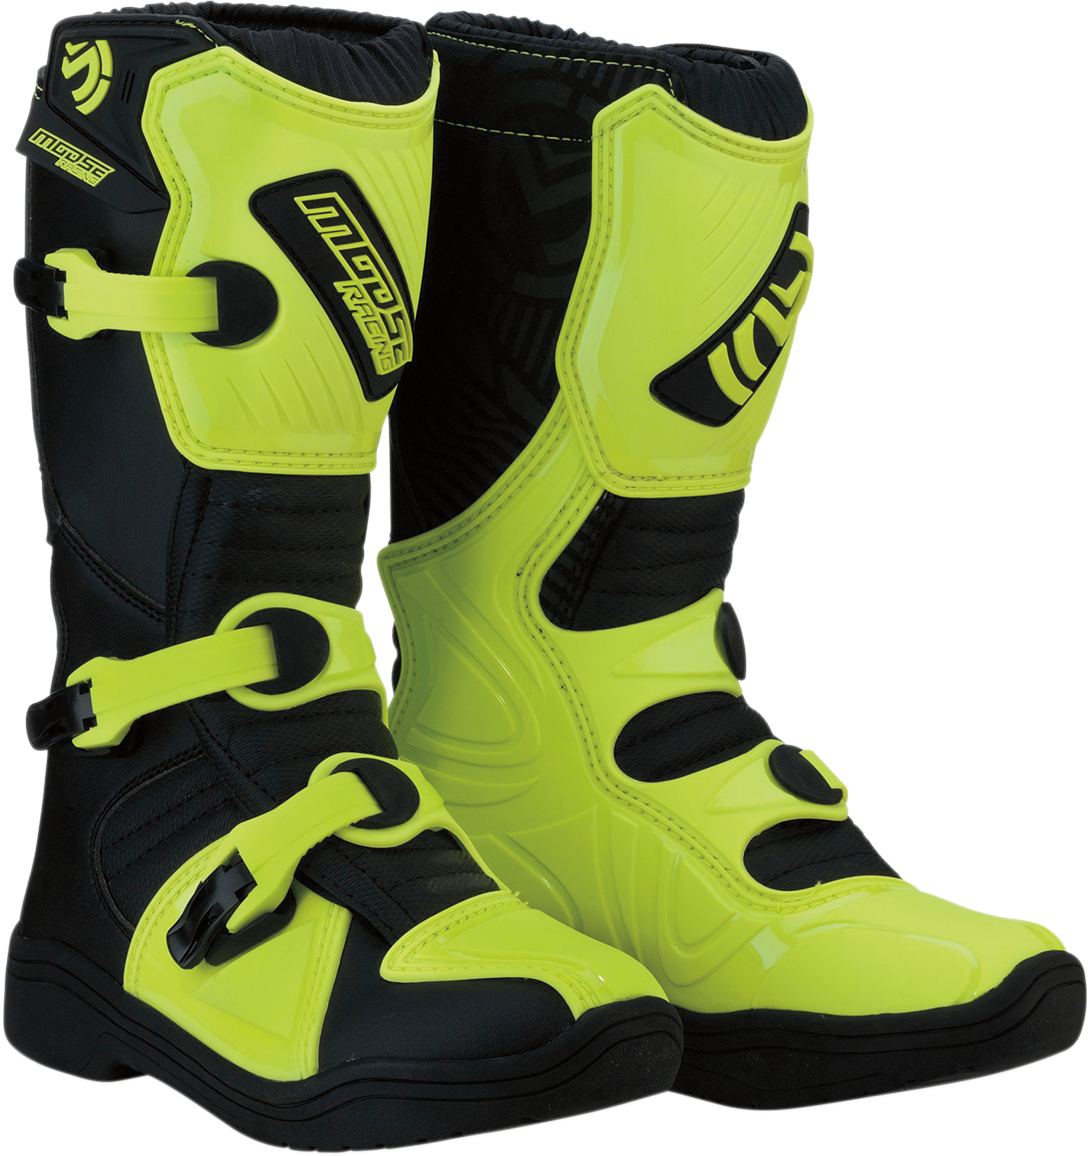 MOOSE RACING M1.3 Boots - Black/Hi-Viz Yellow - Size 3 3411-0446